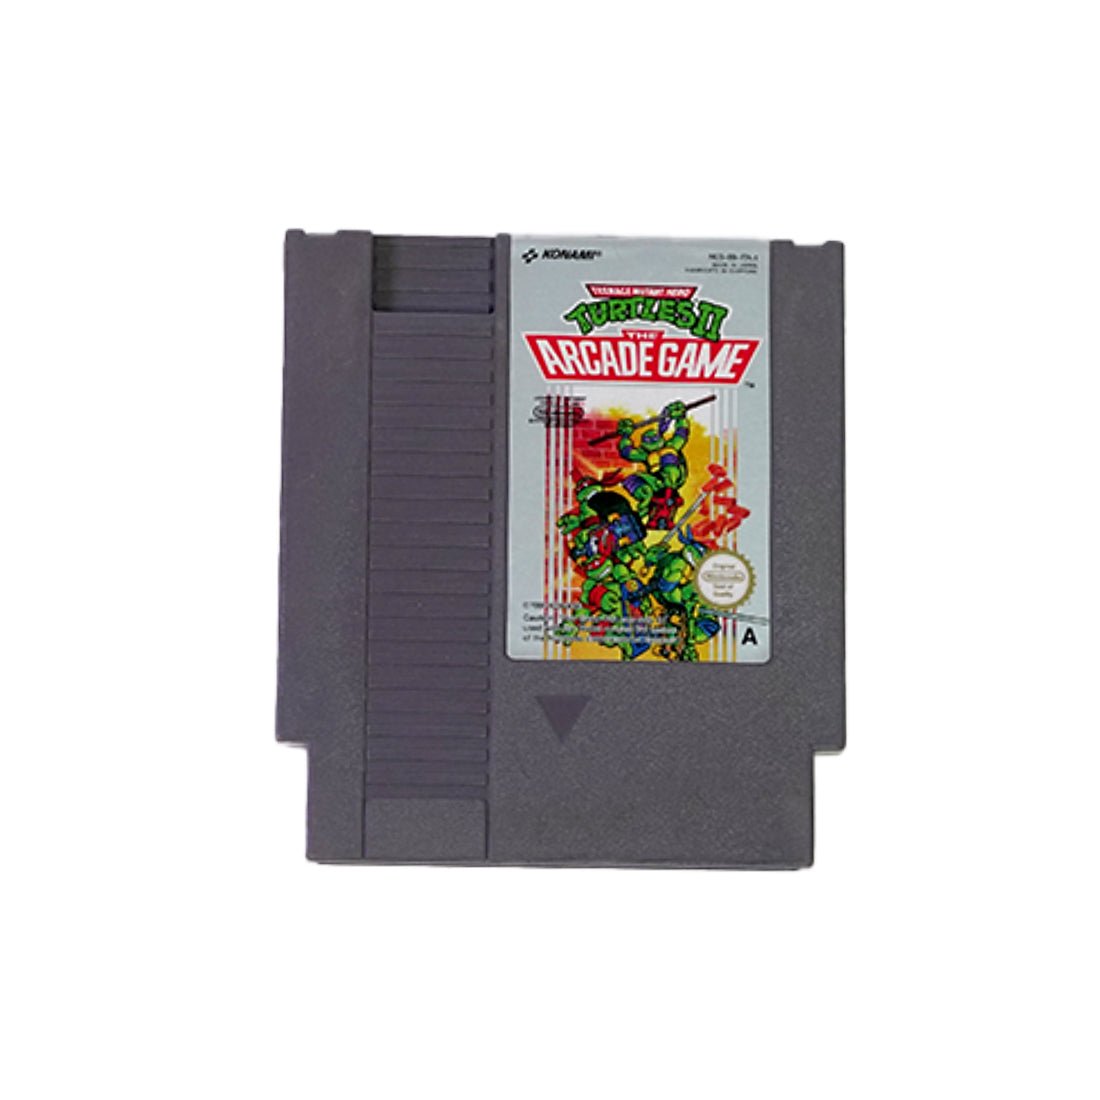 (Pre-Owned) Teenage Mutant Hero Turtles: The Arcade Game - NES - ريترو - Store 974 | ستور ٩٧٤